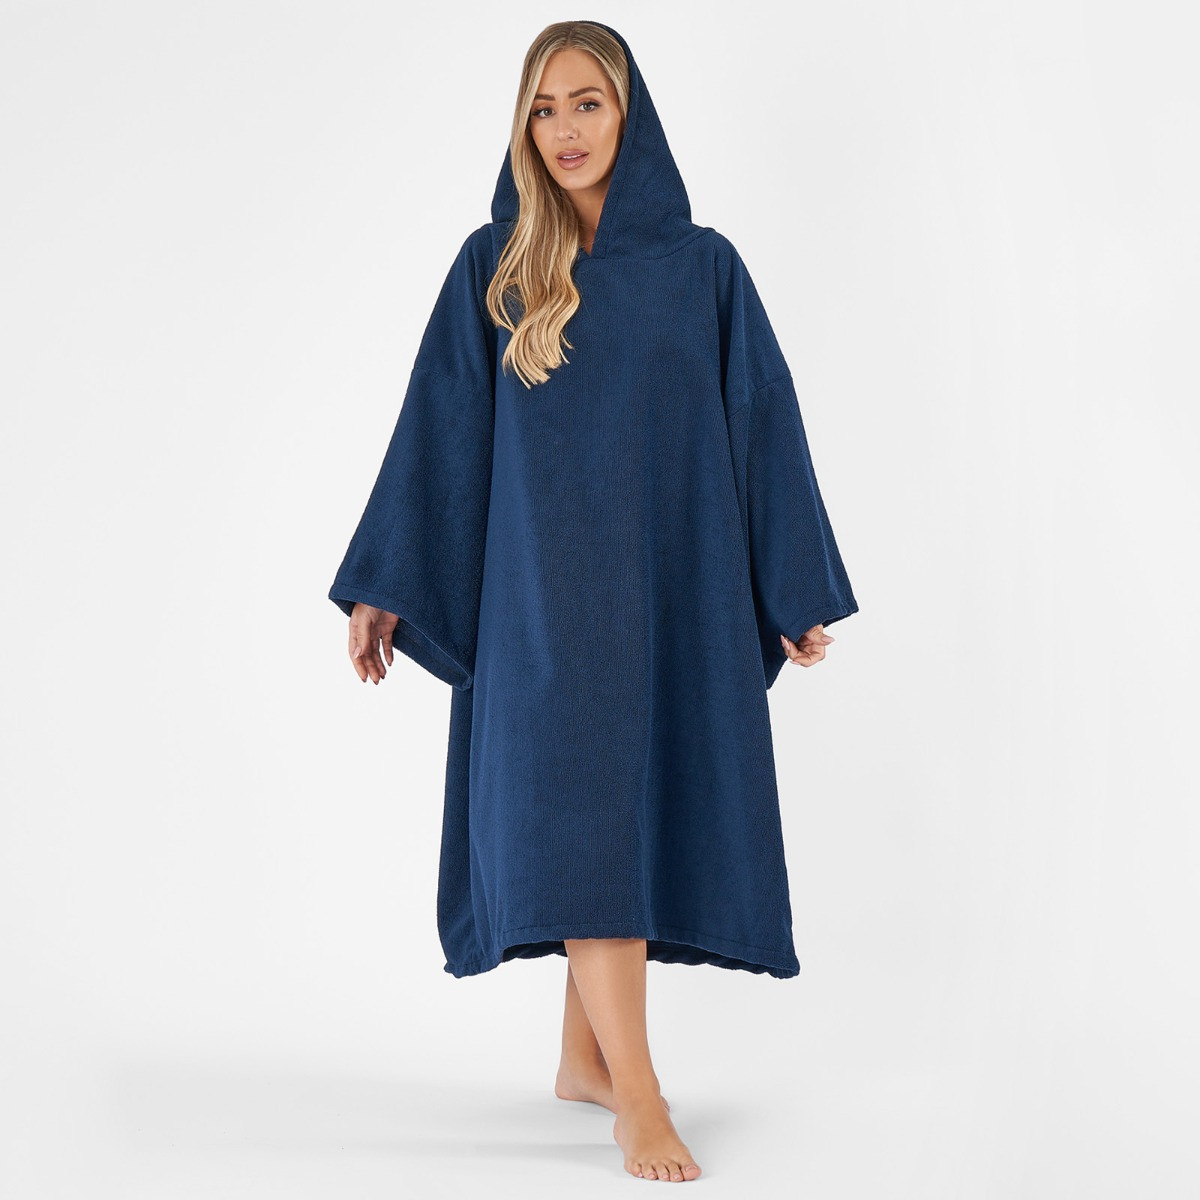 Brentfords Adult Poncho Oversized Changing Robe - Navy Blue>